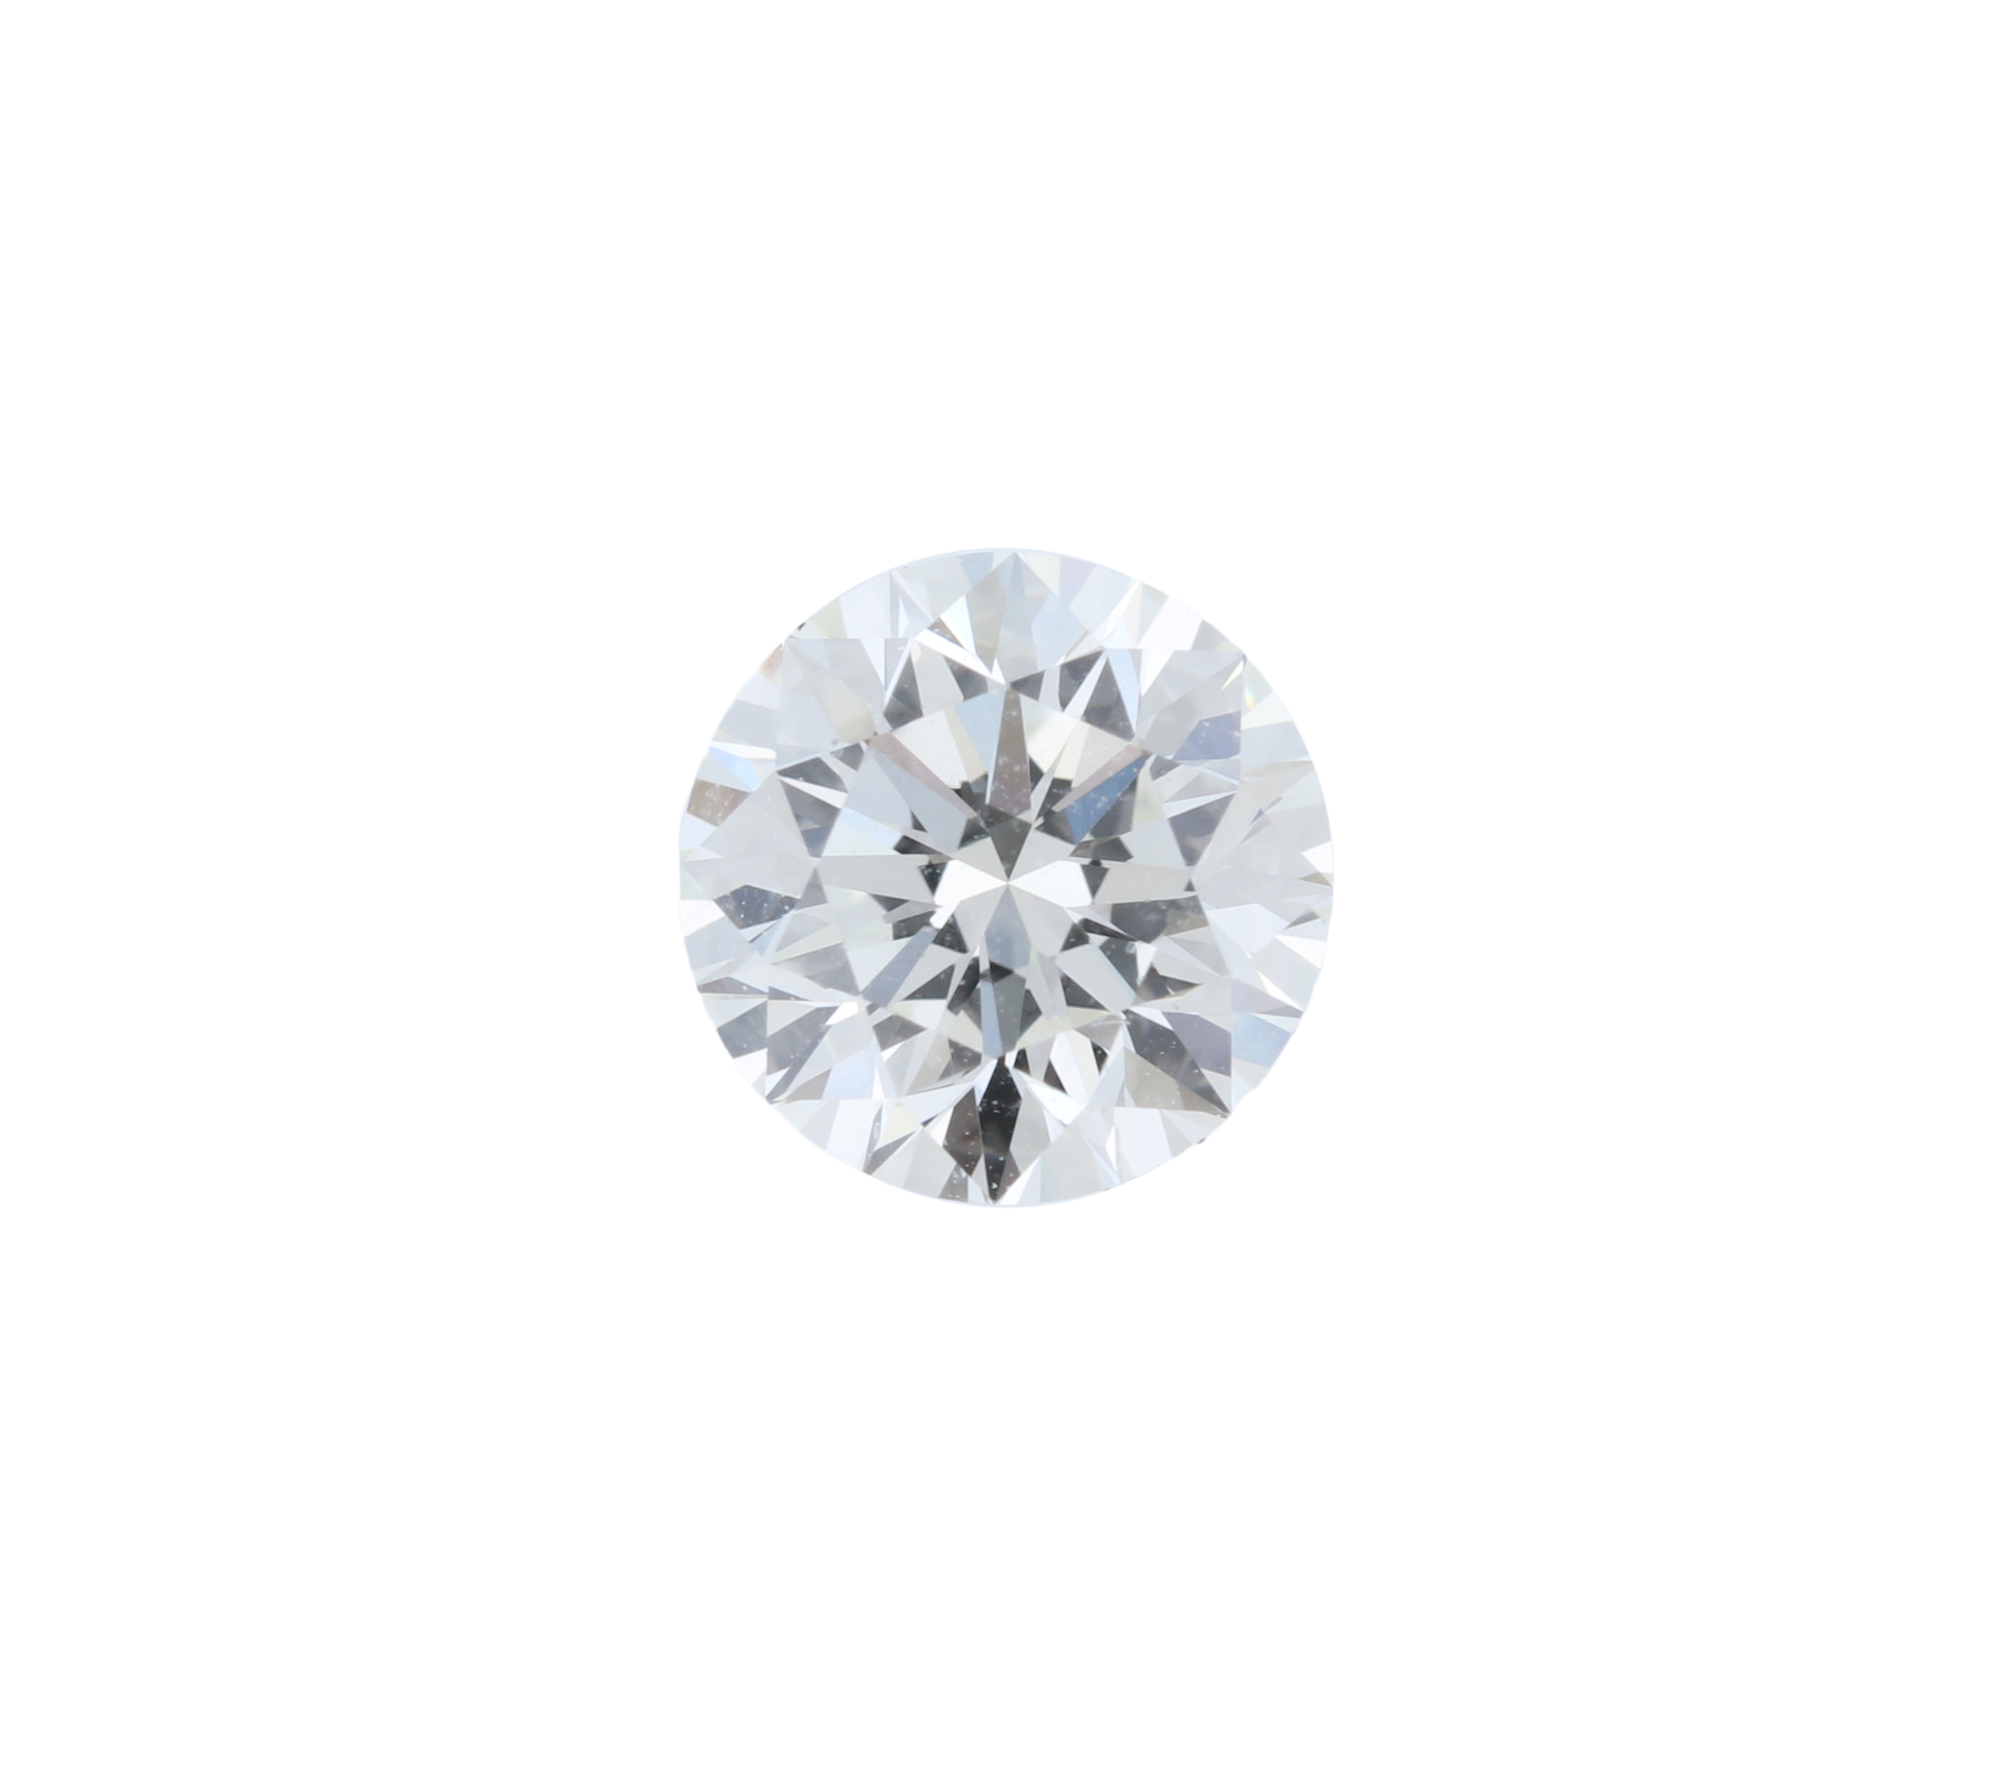 Round Brilliant Cut Diamond -1.17 cts